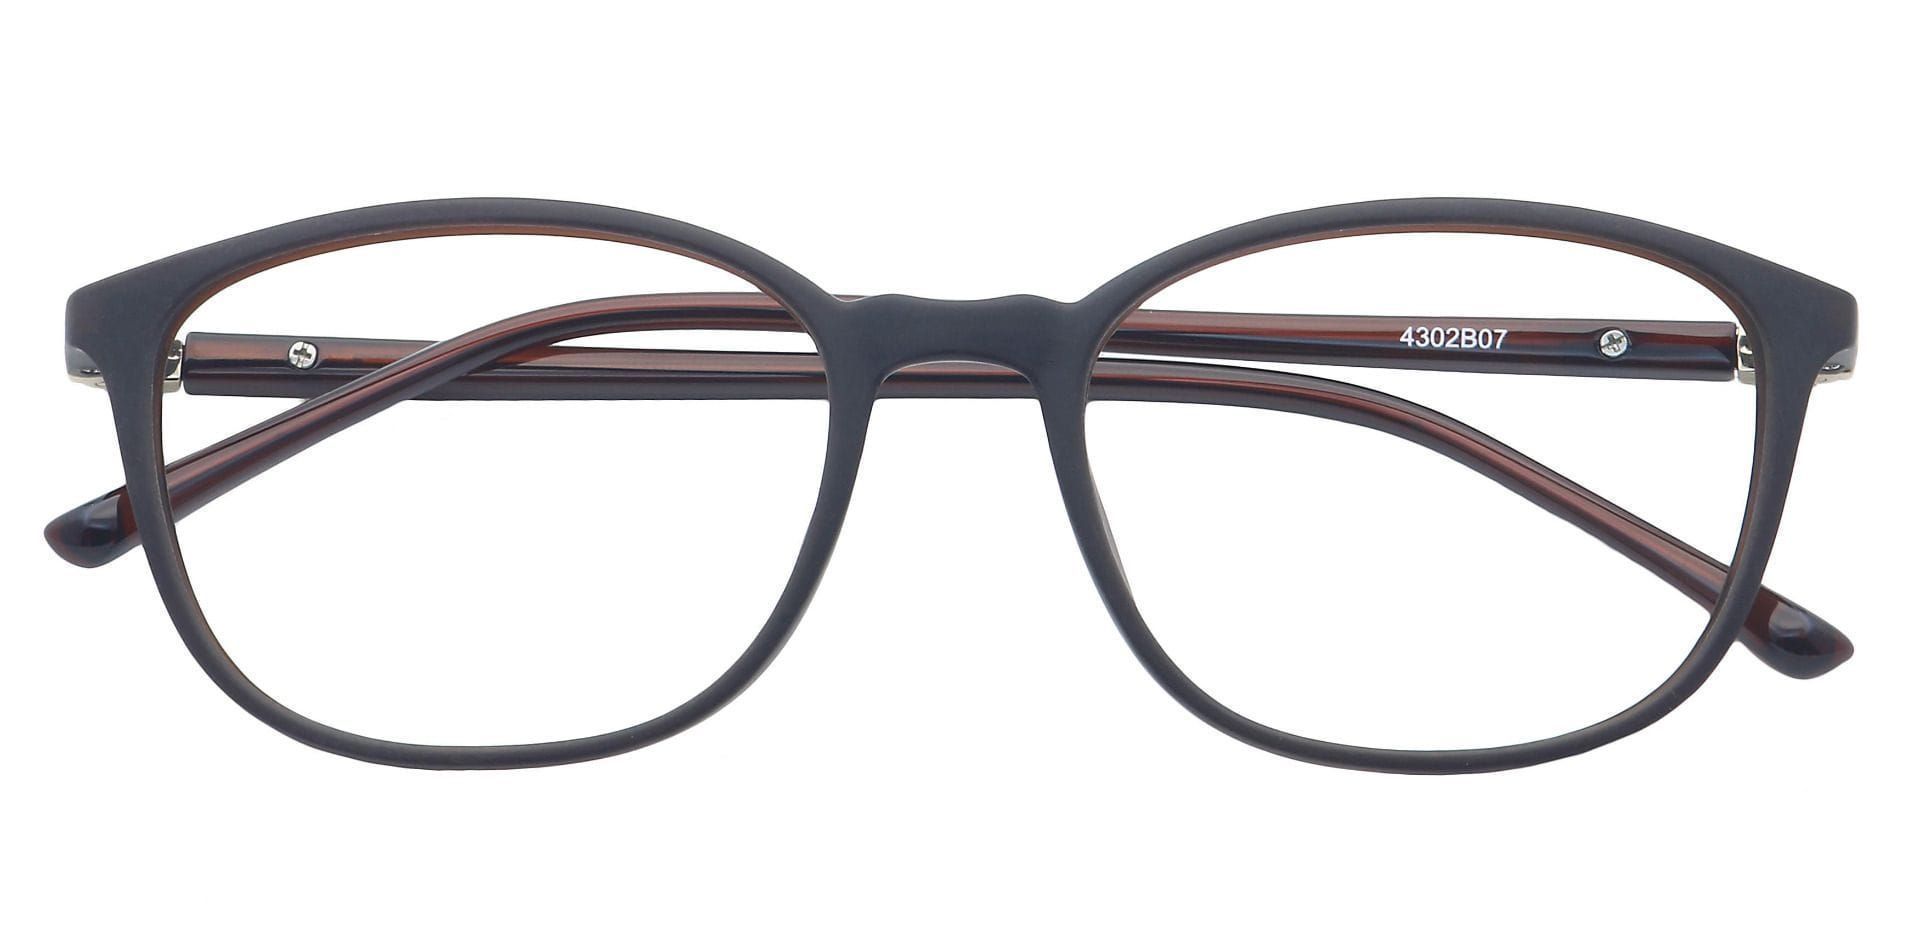 Karleen Oval Eyeglasses Frame - Brown